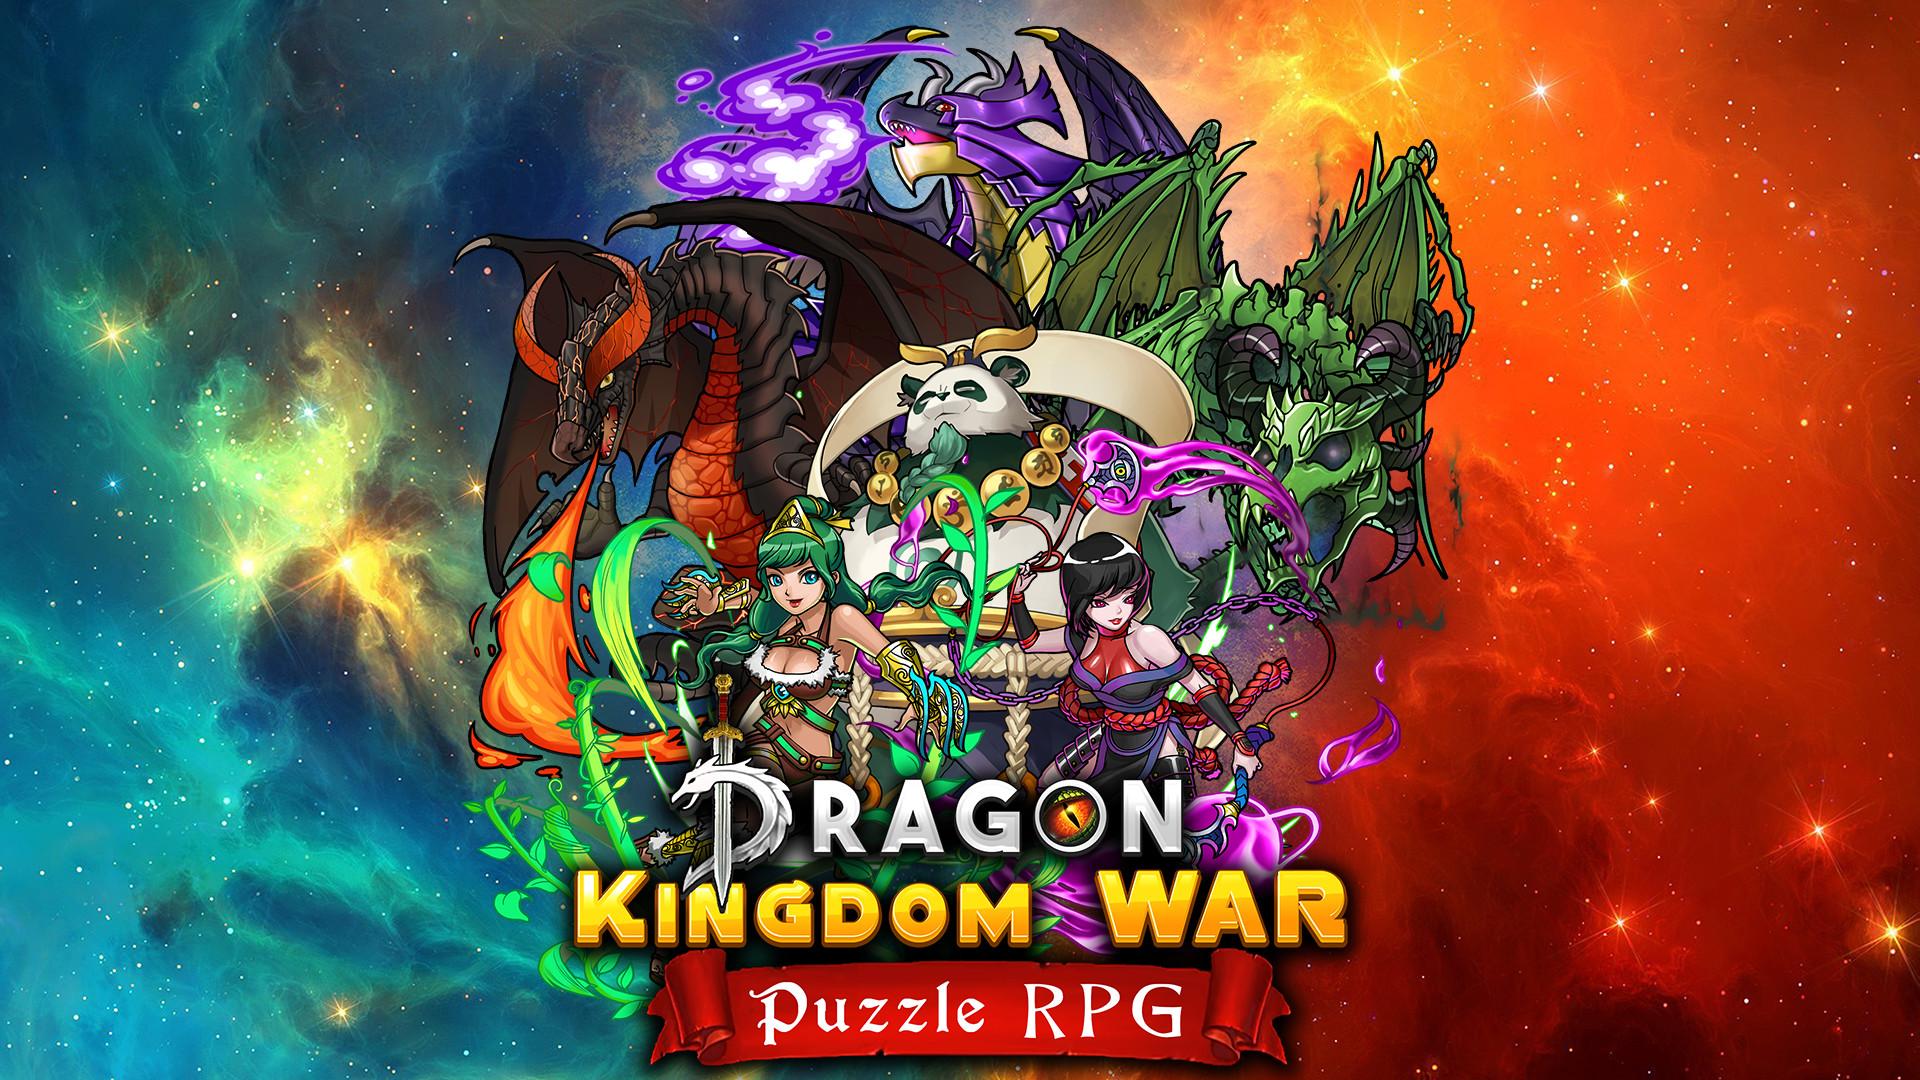 Screenshot №11 from game Dragon Kingdom War